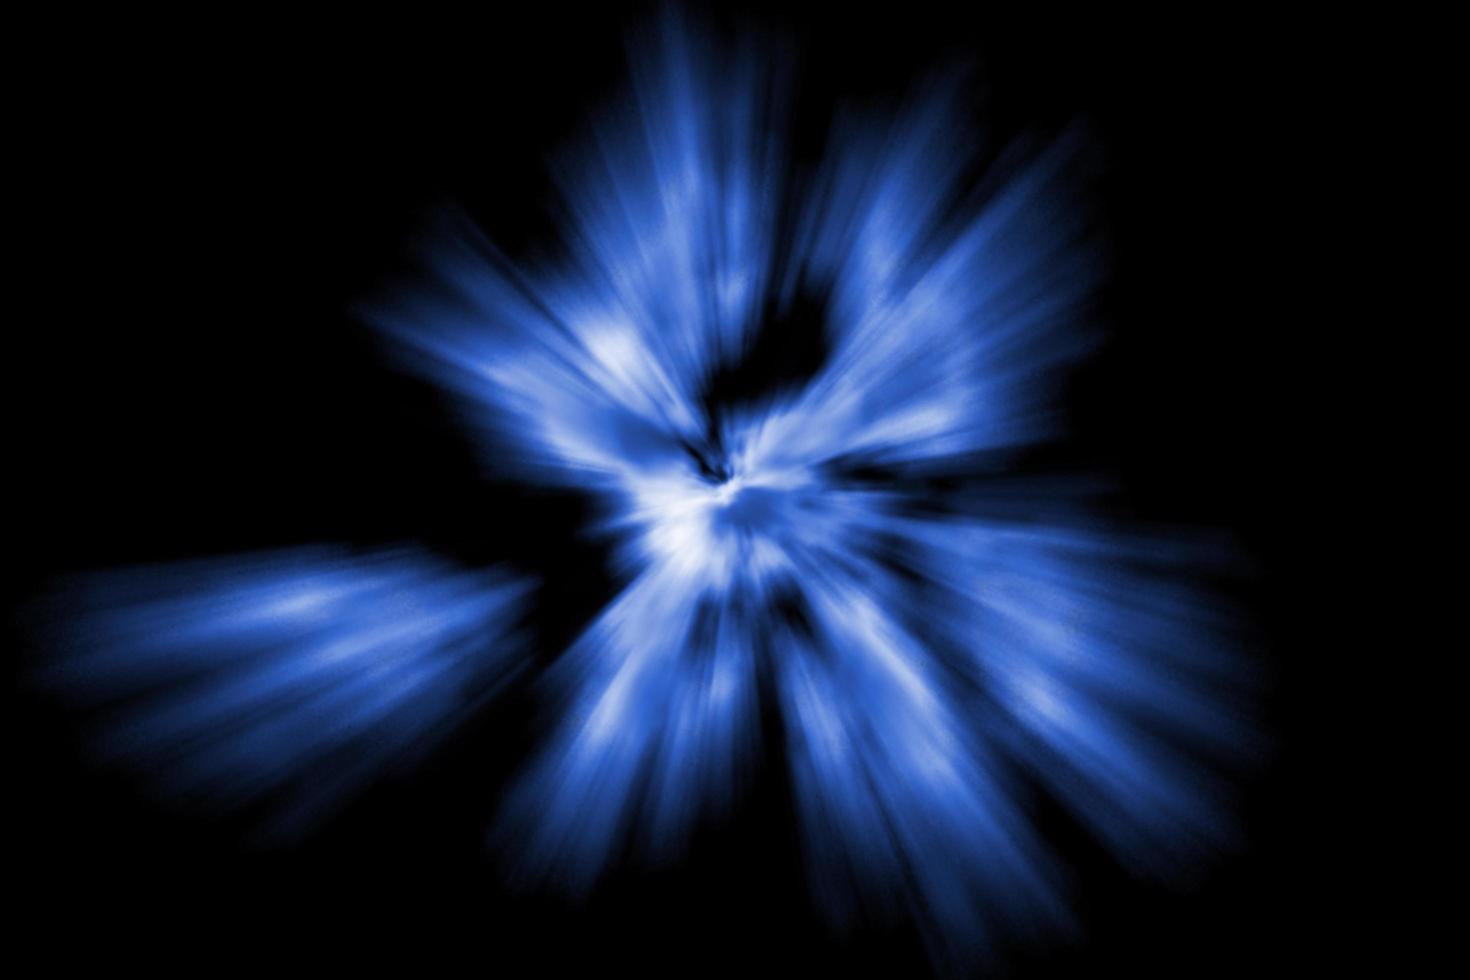 Blue beam light blast image floue, fond abstrait, effet pinceau photo